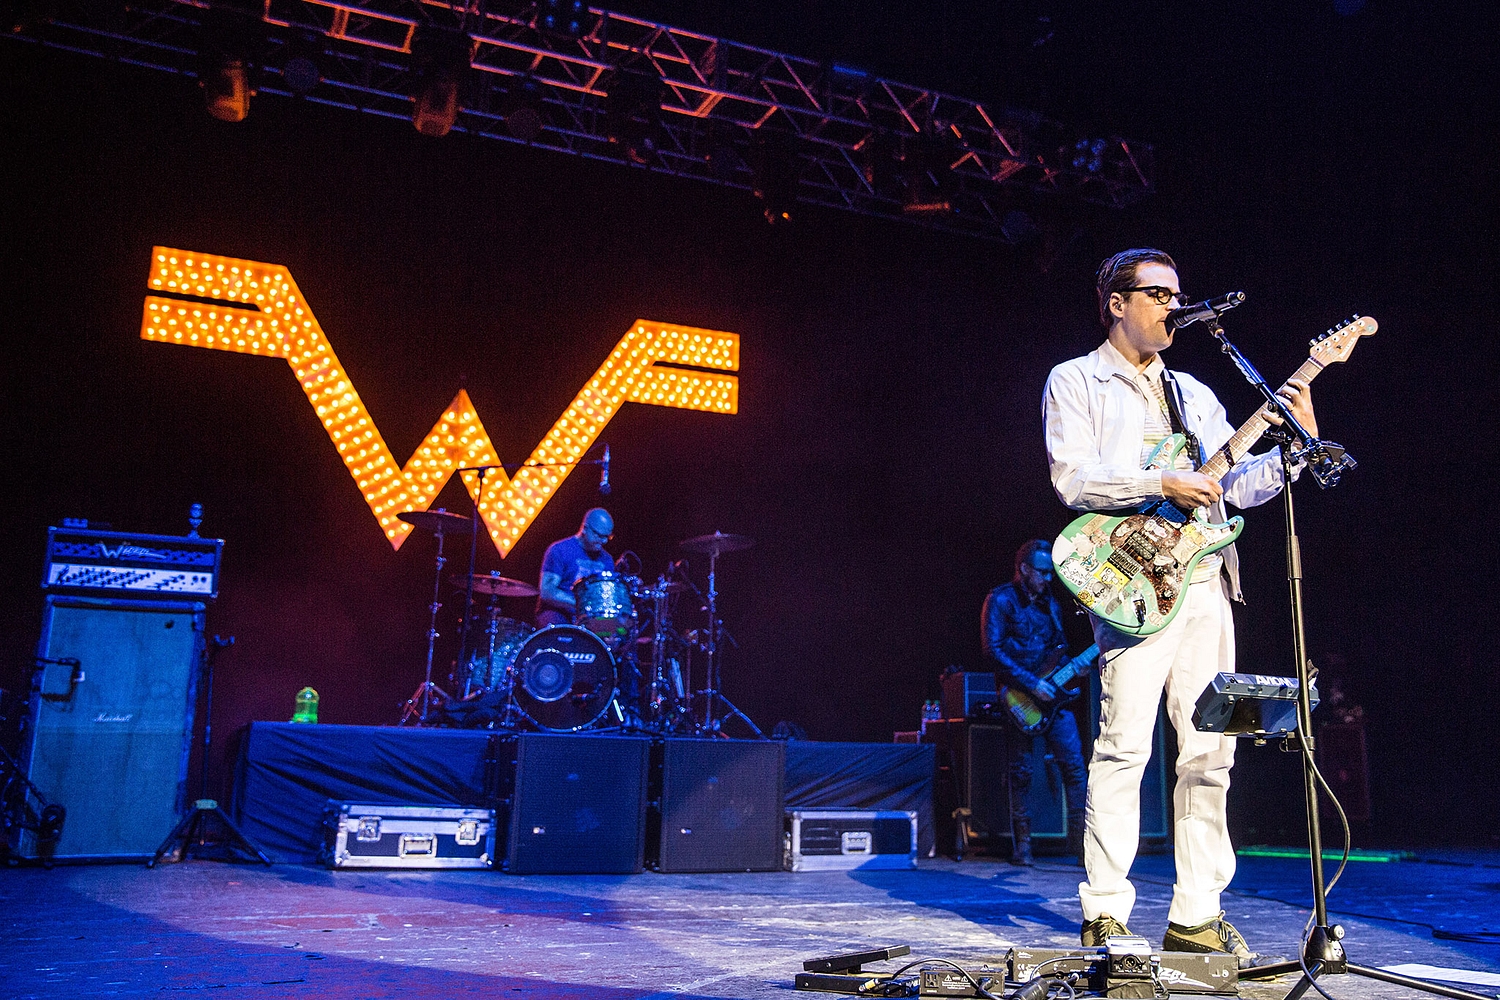 Weezer’s ‘Pinkerton’ goes Platinum… after 20 years